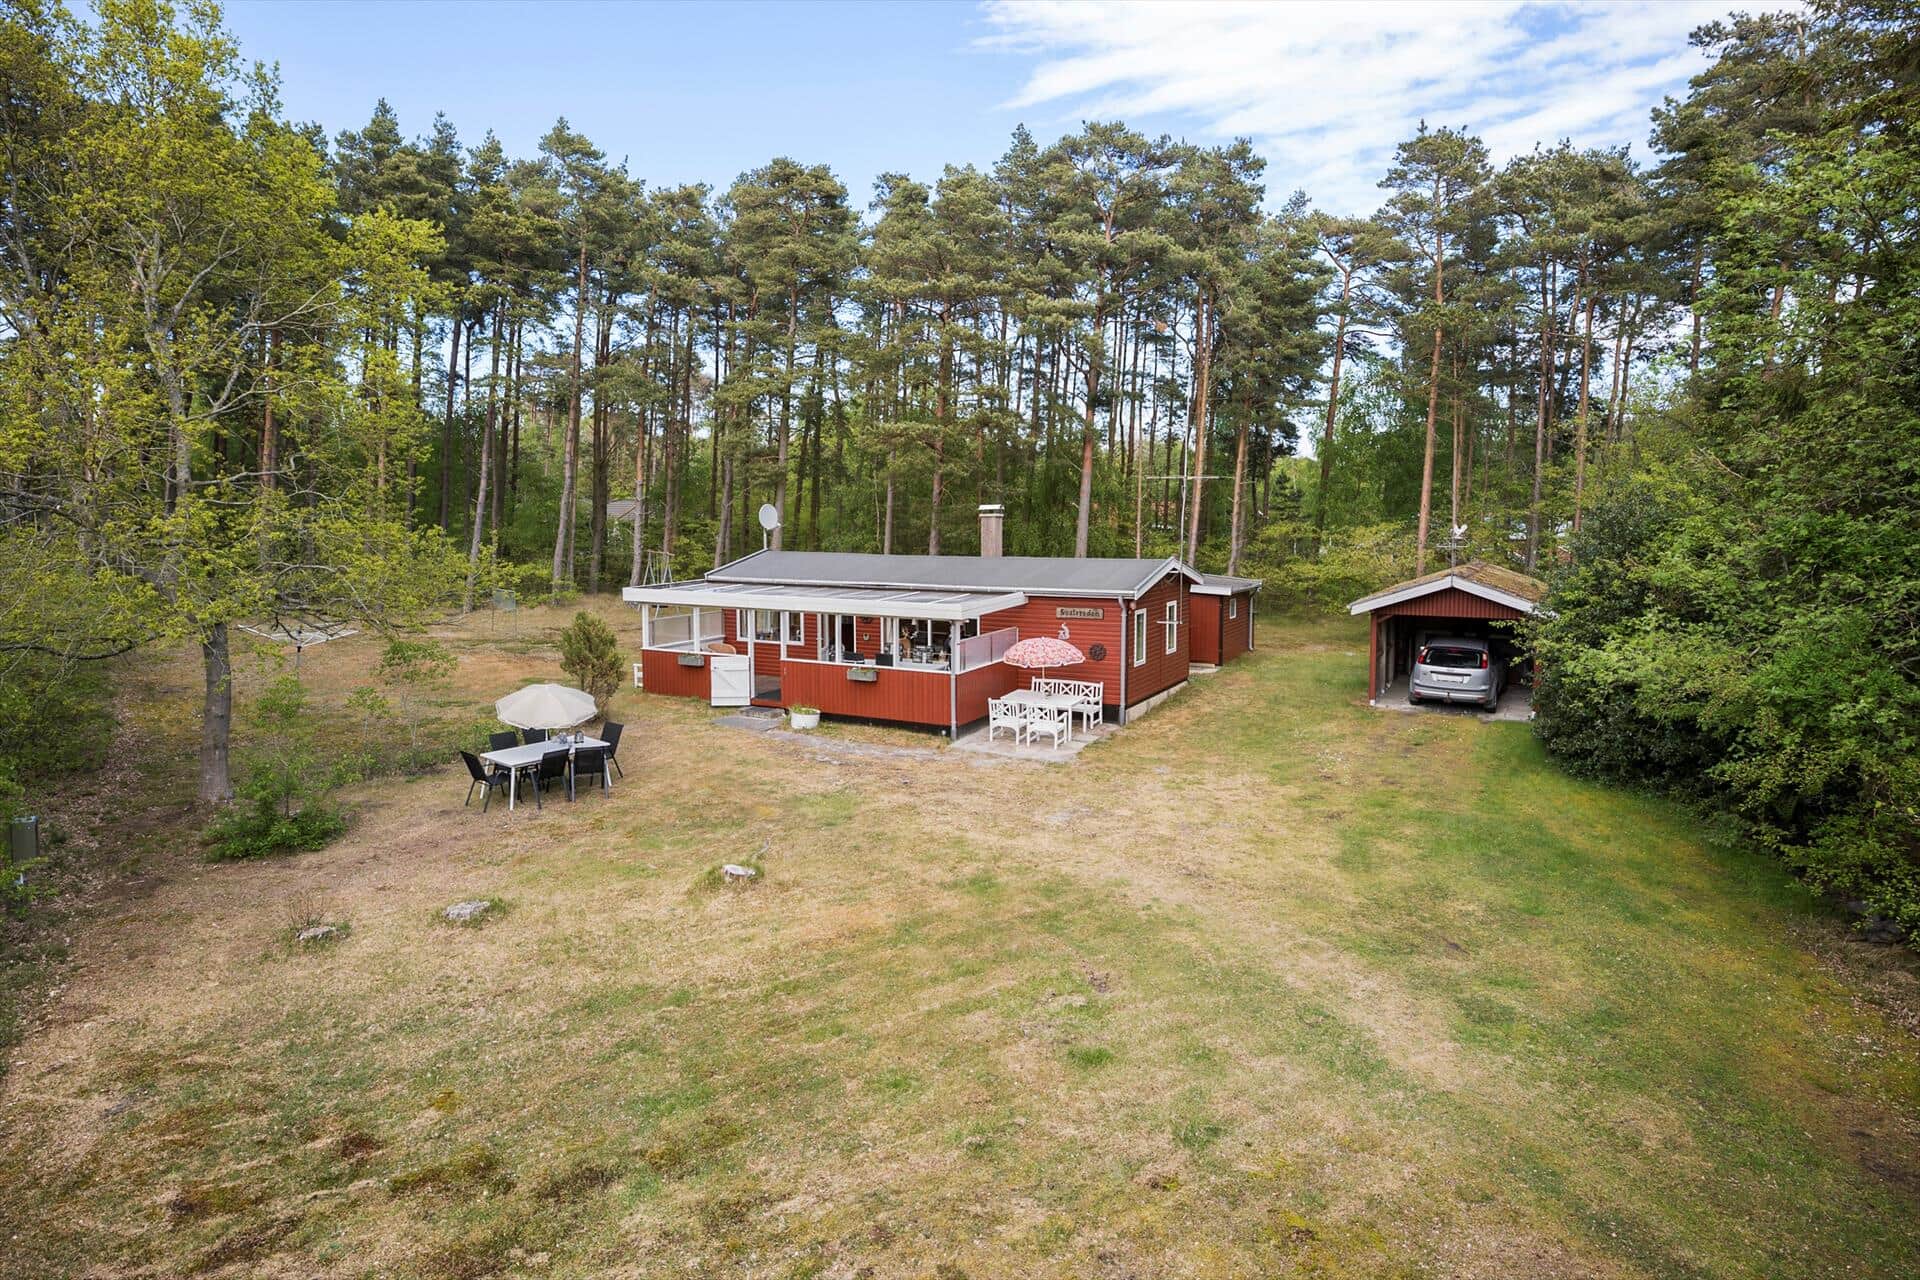 Image 0-10 Holiday-home 1523, Sjøstauan 15, DK - 3720 Aakirkeby